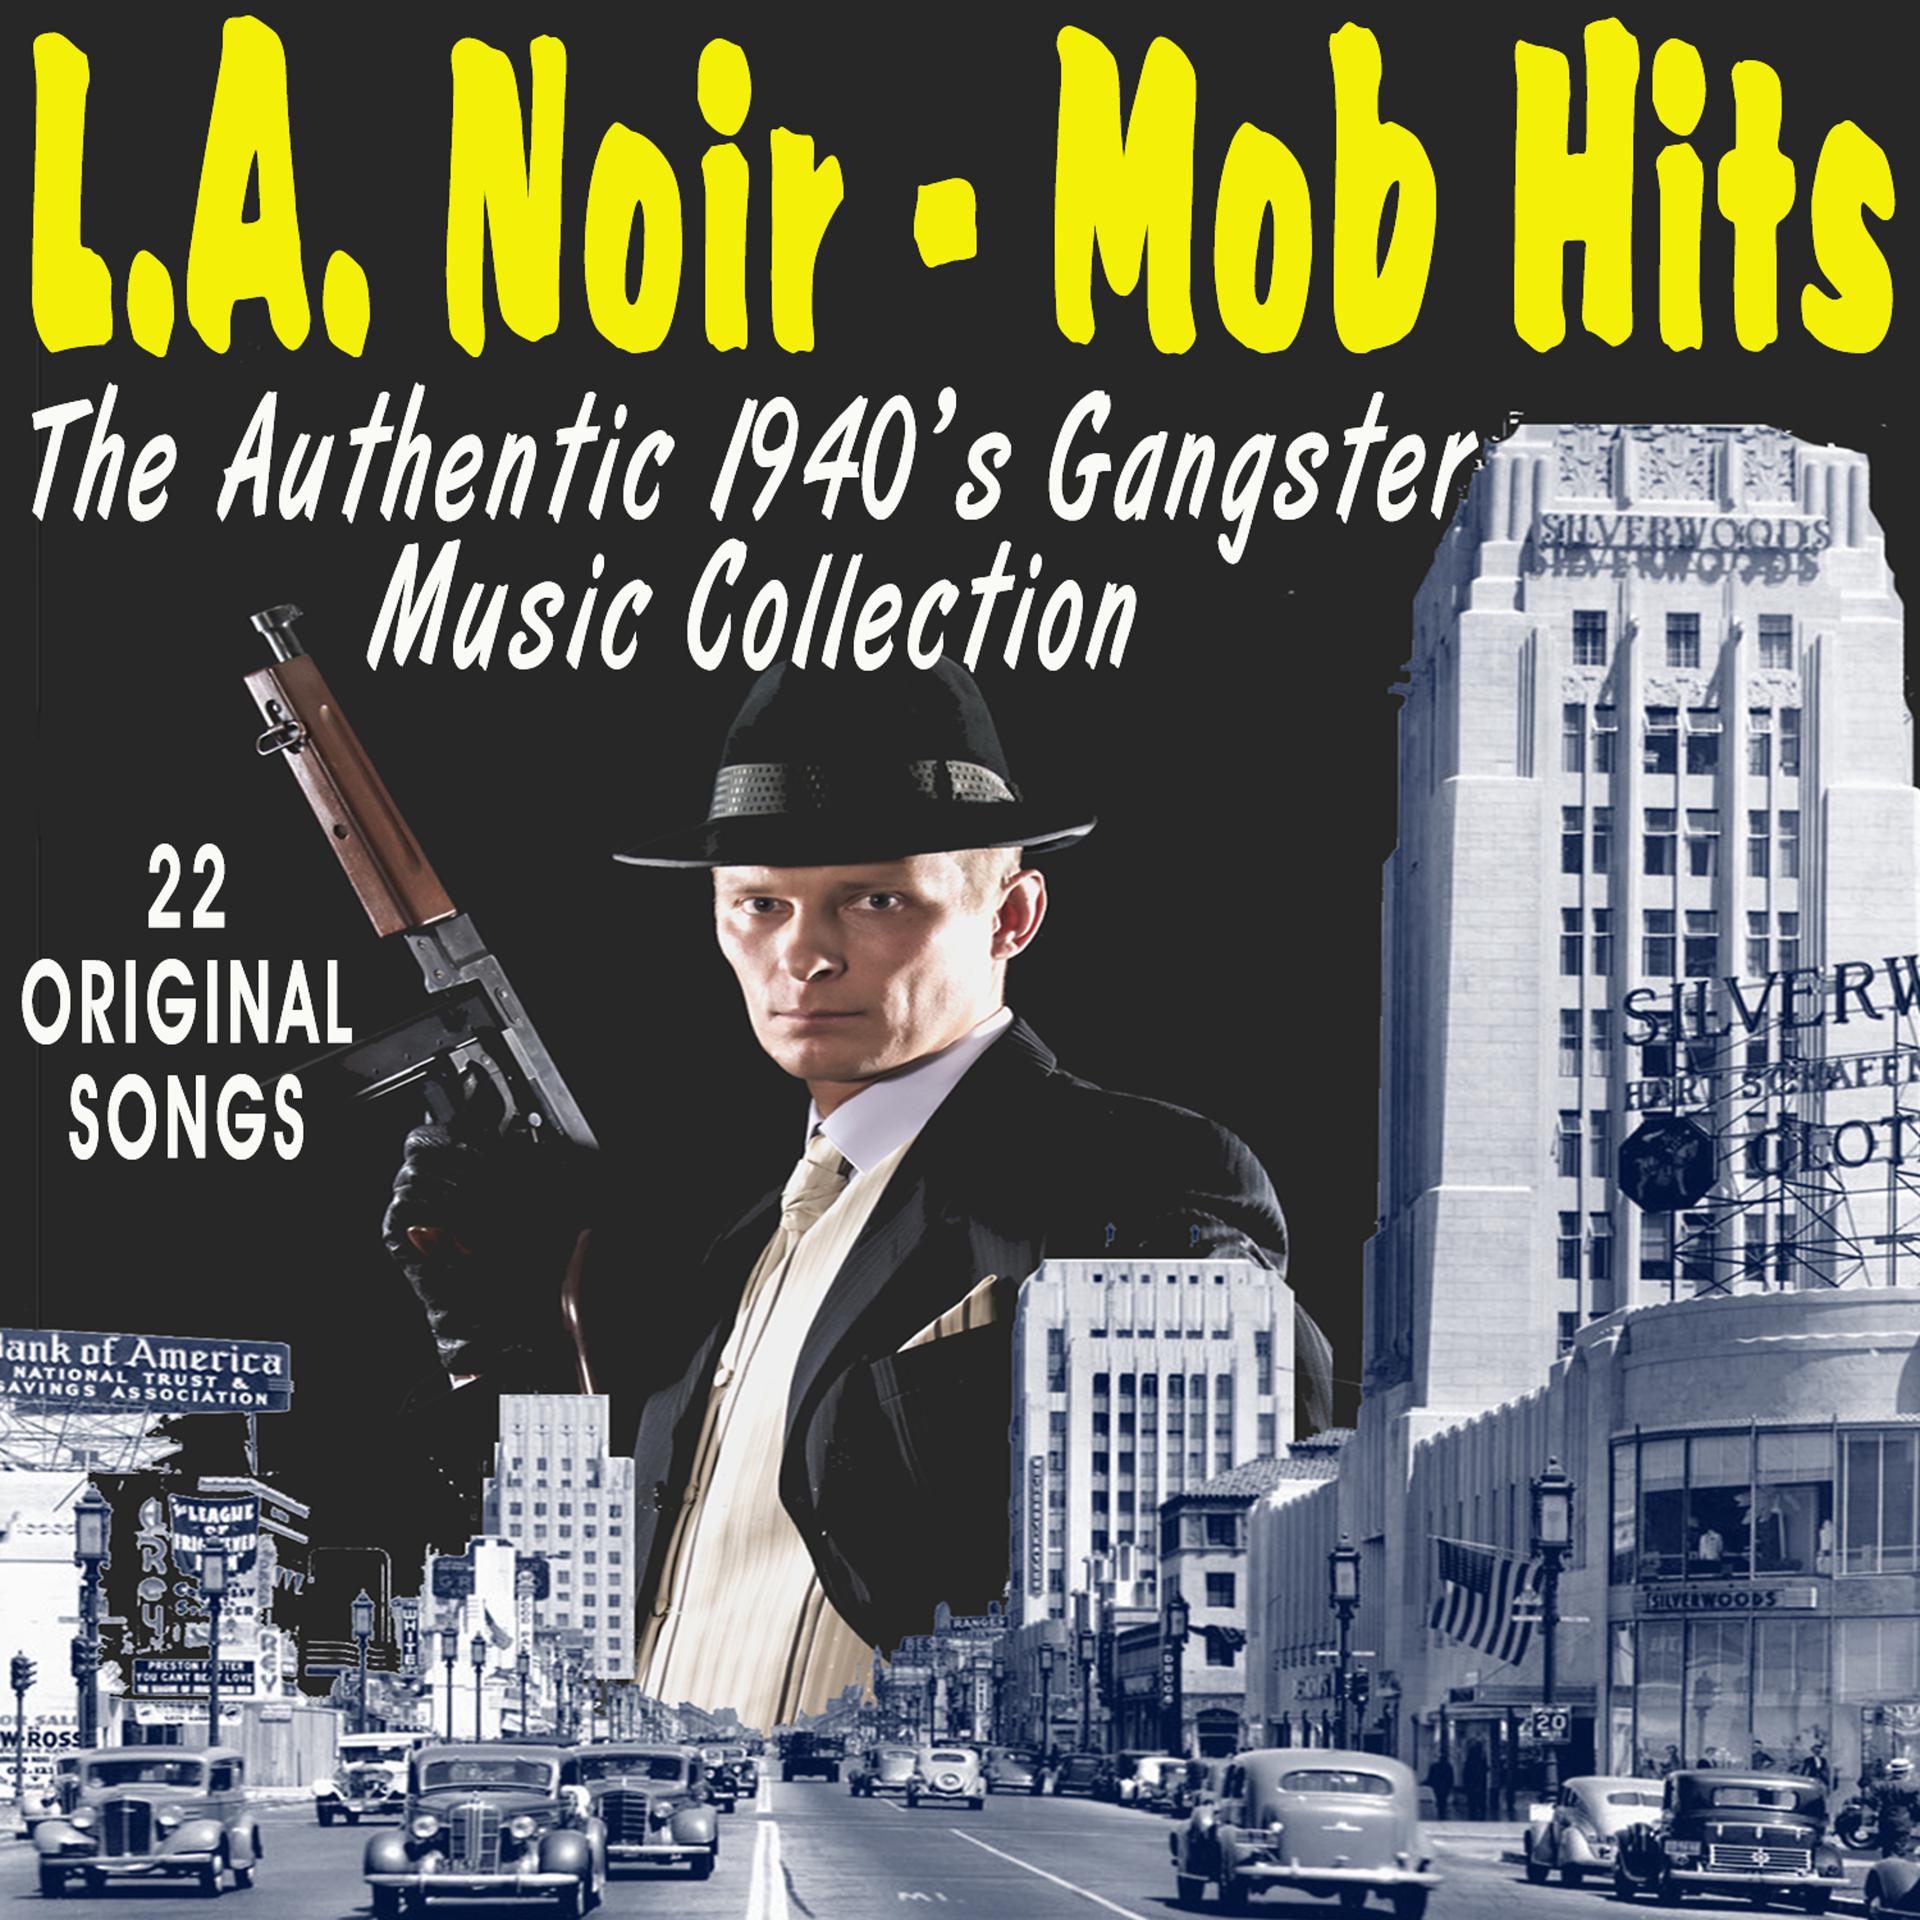 Постер альбома L.A. Noir - Mob Hits